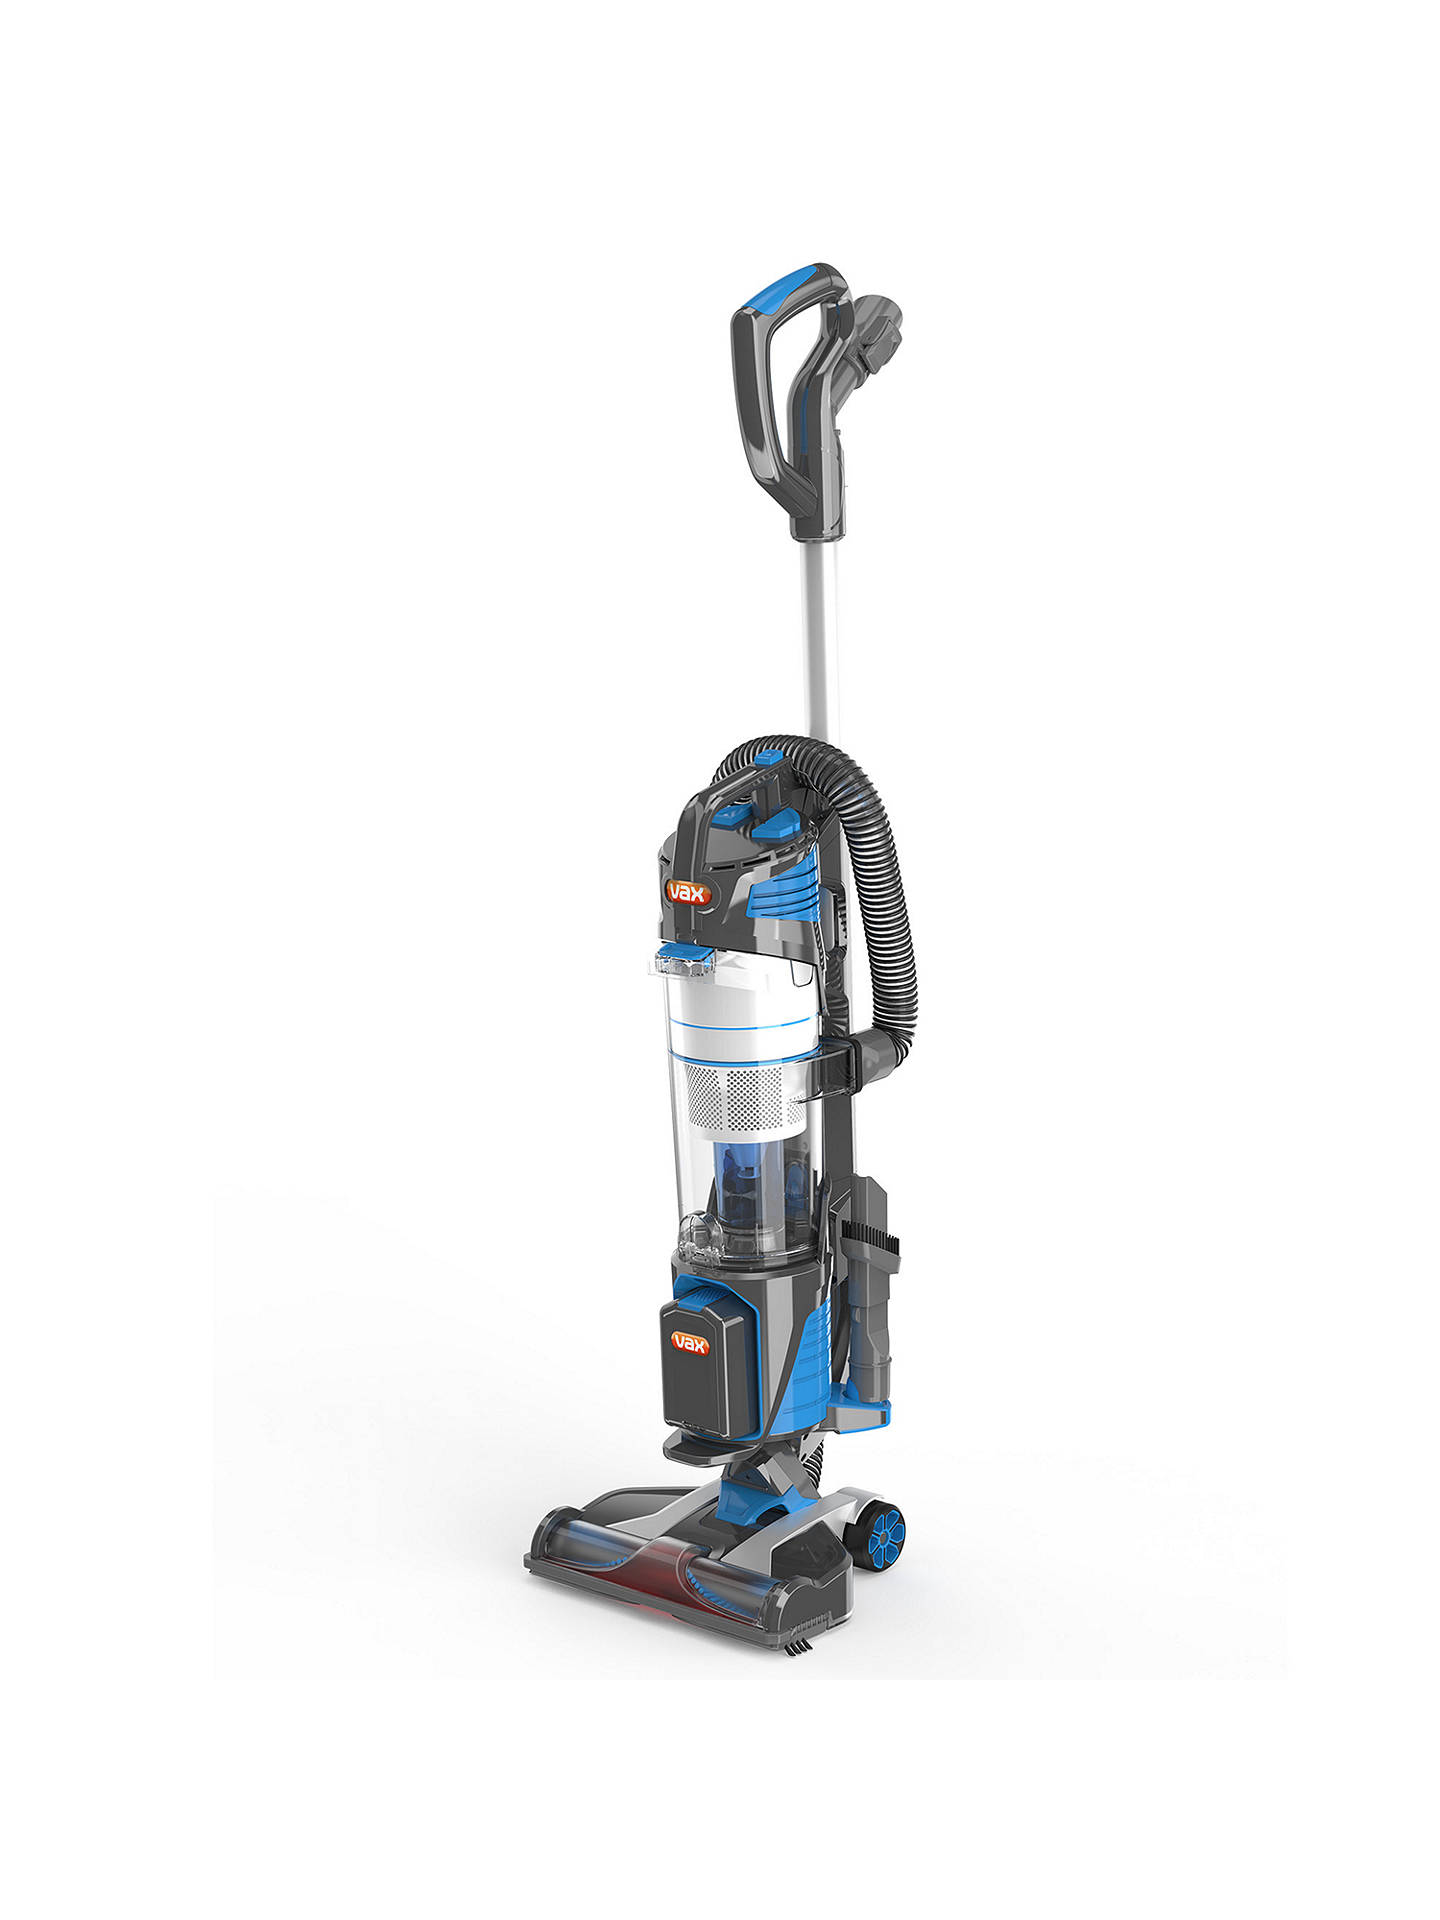 Vax U85-ACLG-B Air Cordless Lift Upright Vacuum Cleaner Blue